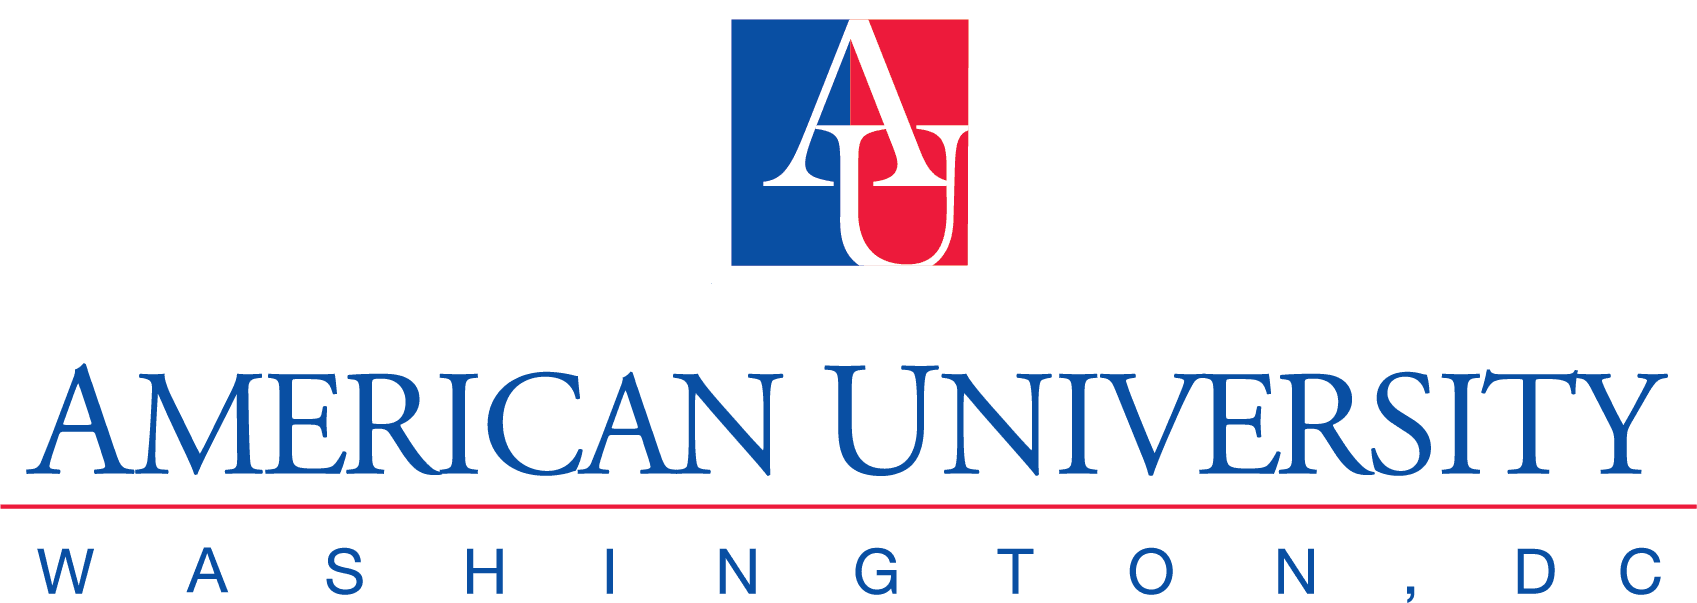 American University